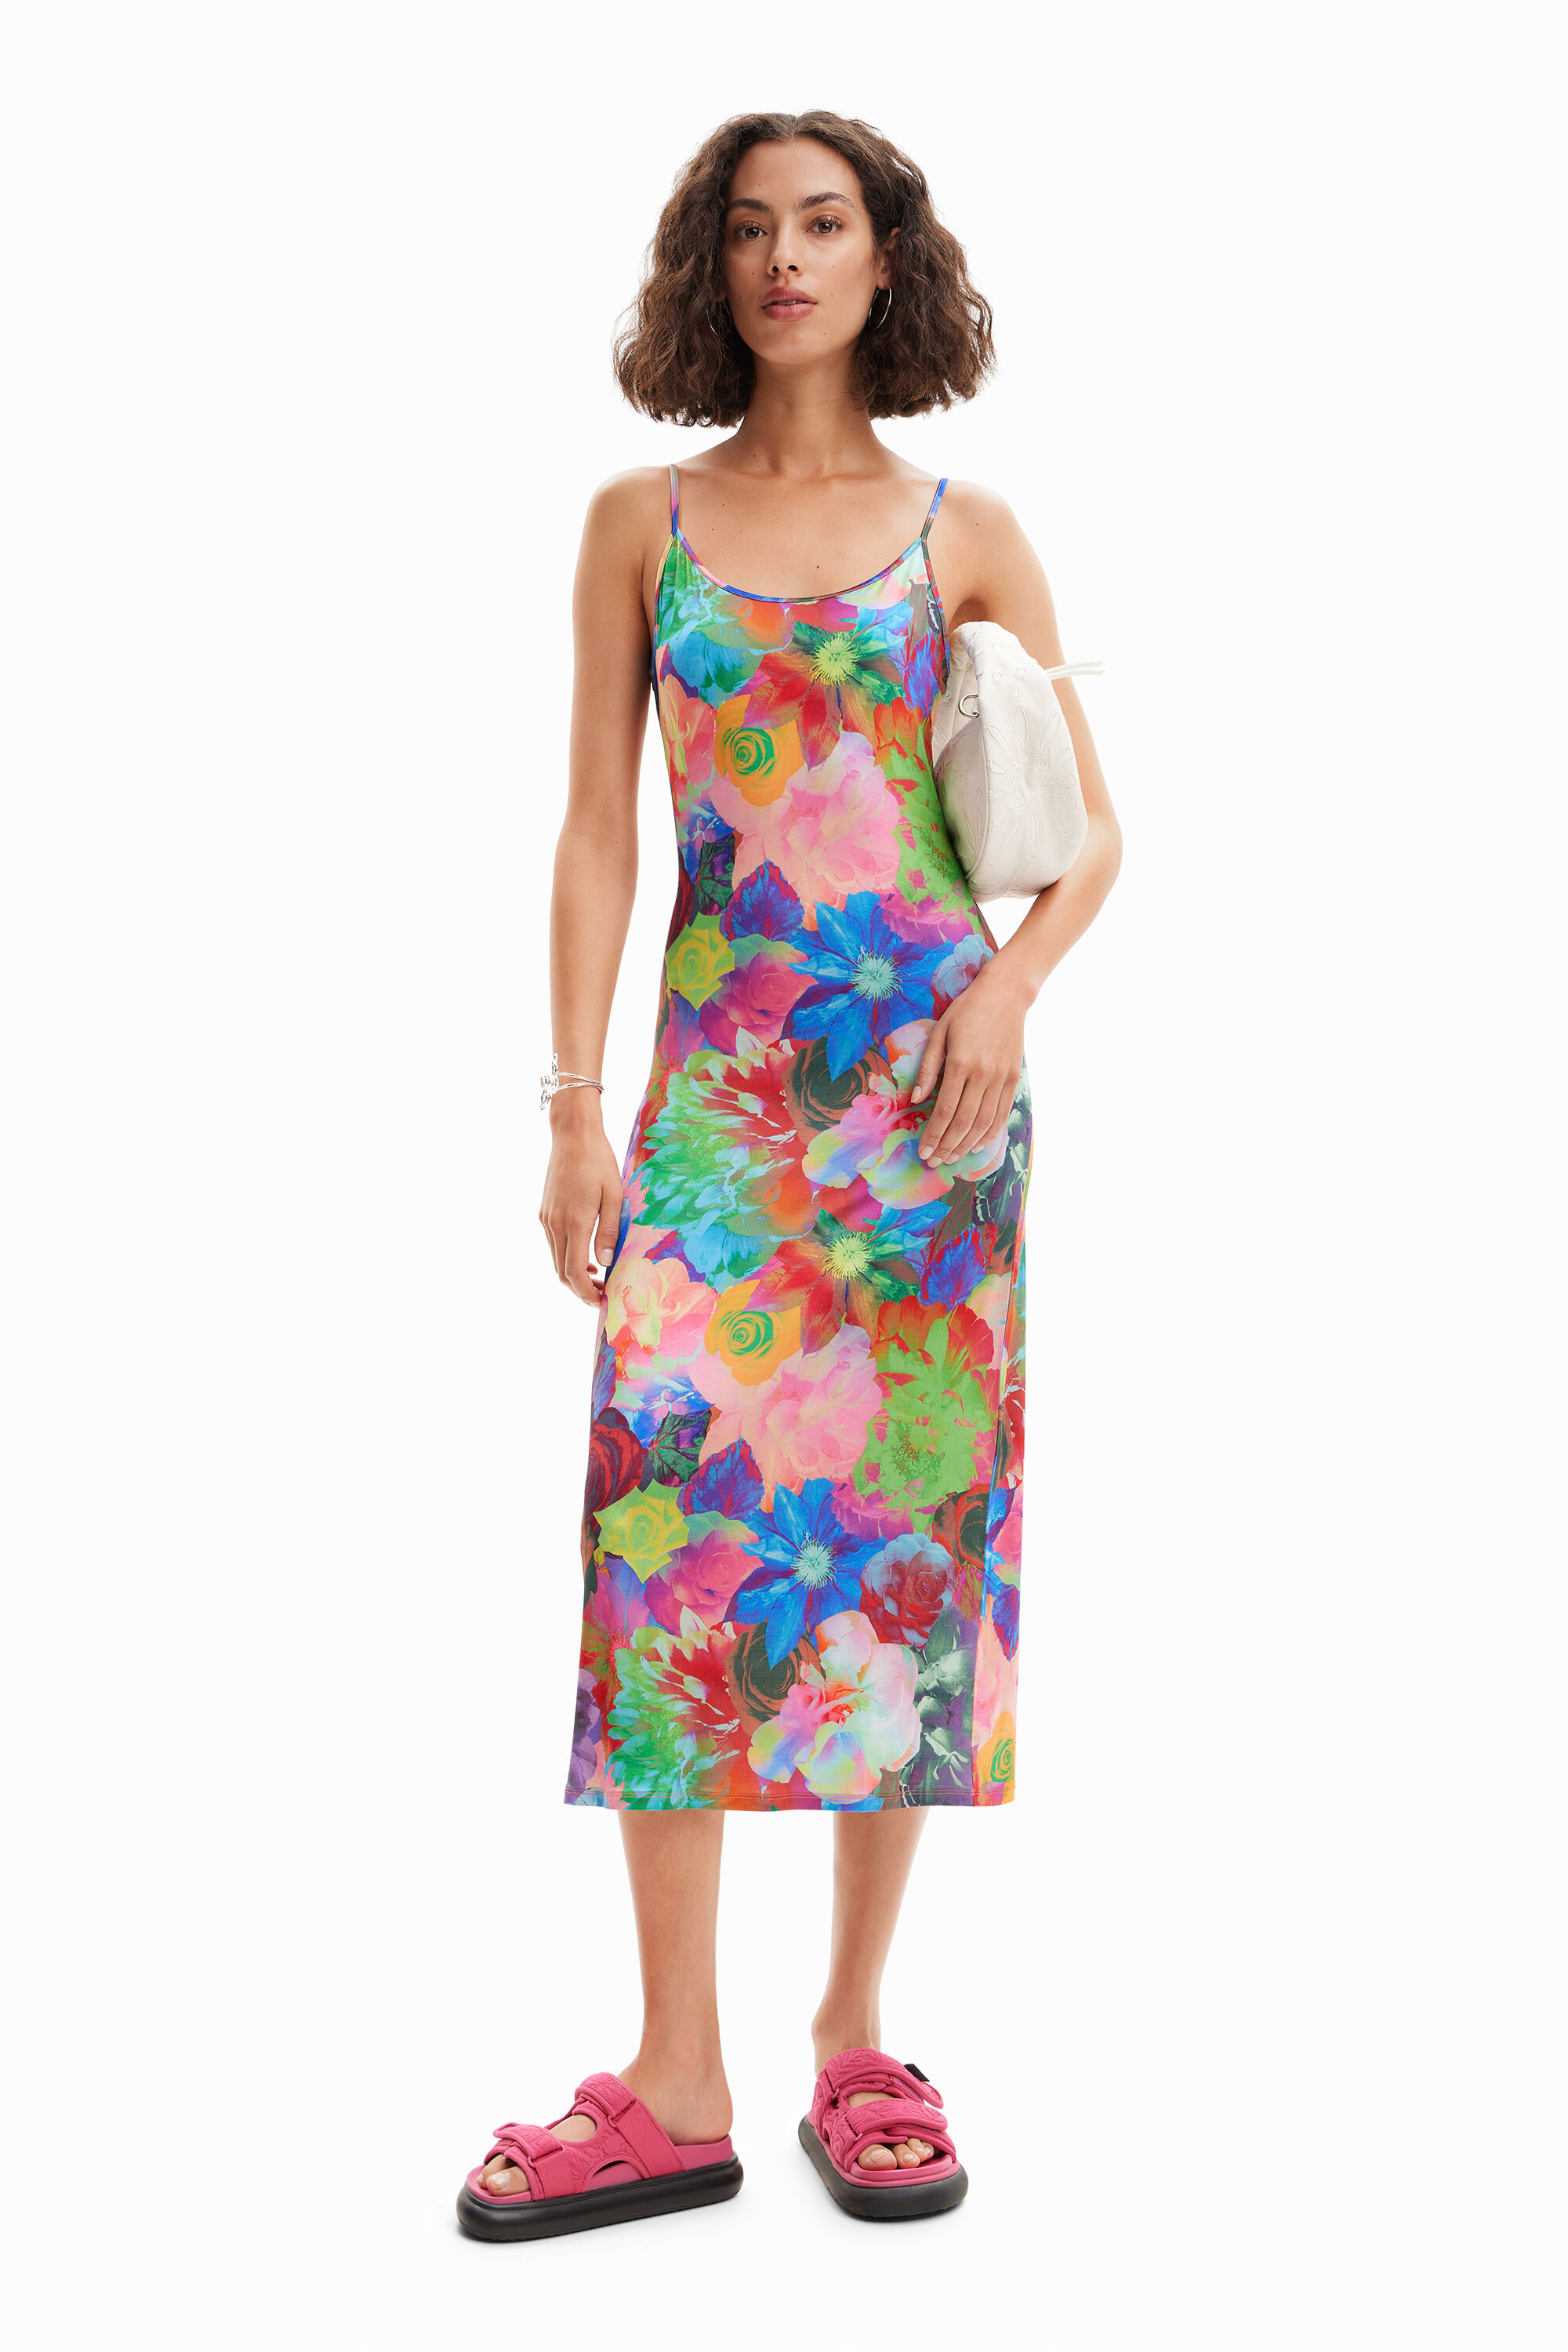 Women's Slim floral lingerie dress I Desigual.com